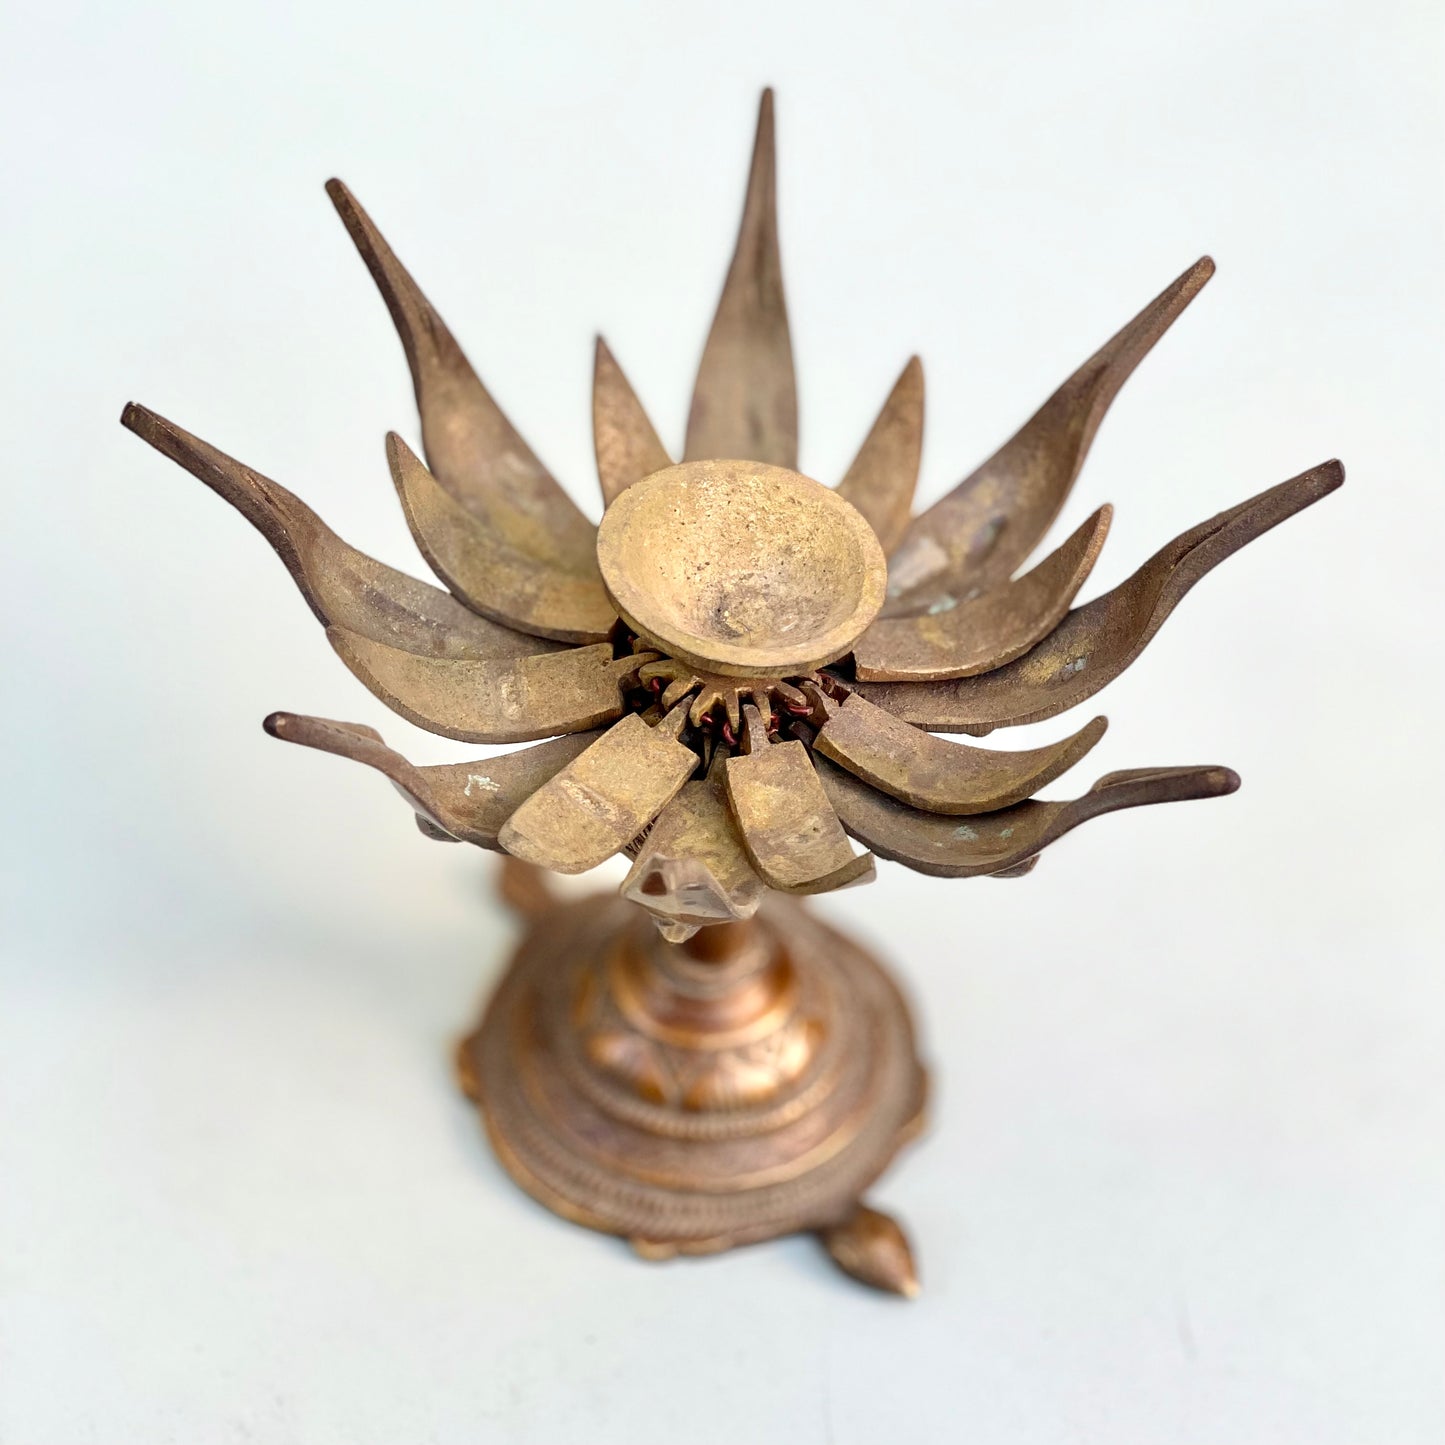 Vintage Lotus Lamp